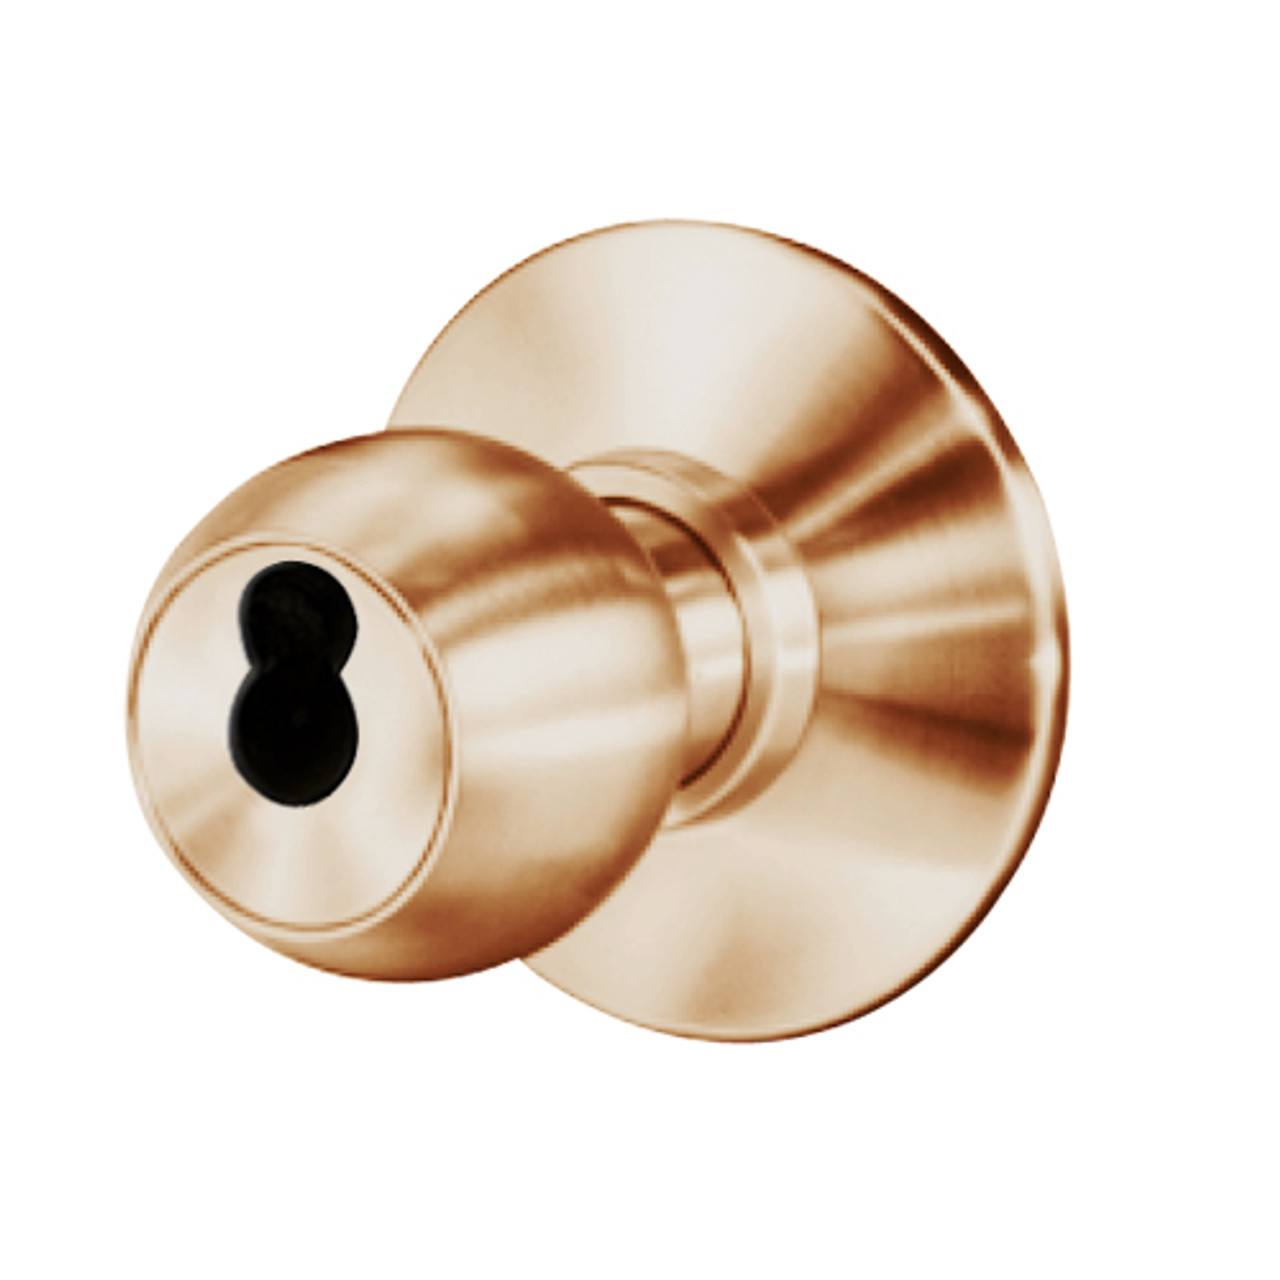 8K47YR4DS3612 Best 8K Series Exit Heavy Duty Cylindrical Knob Locks with Round Style in Satin Bronze